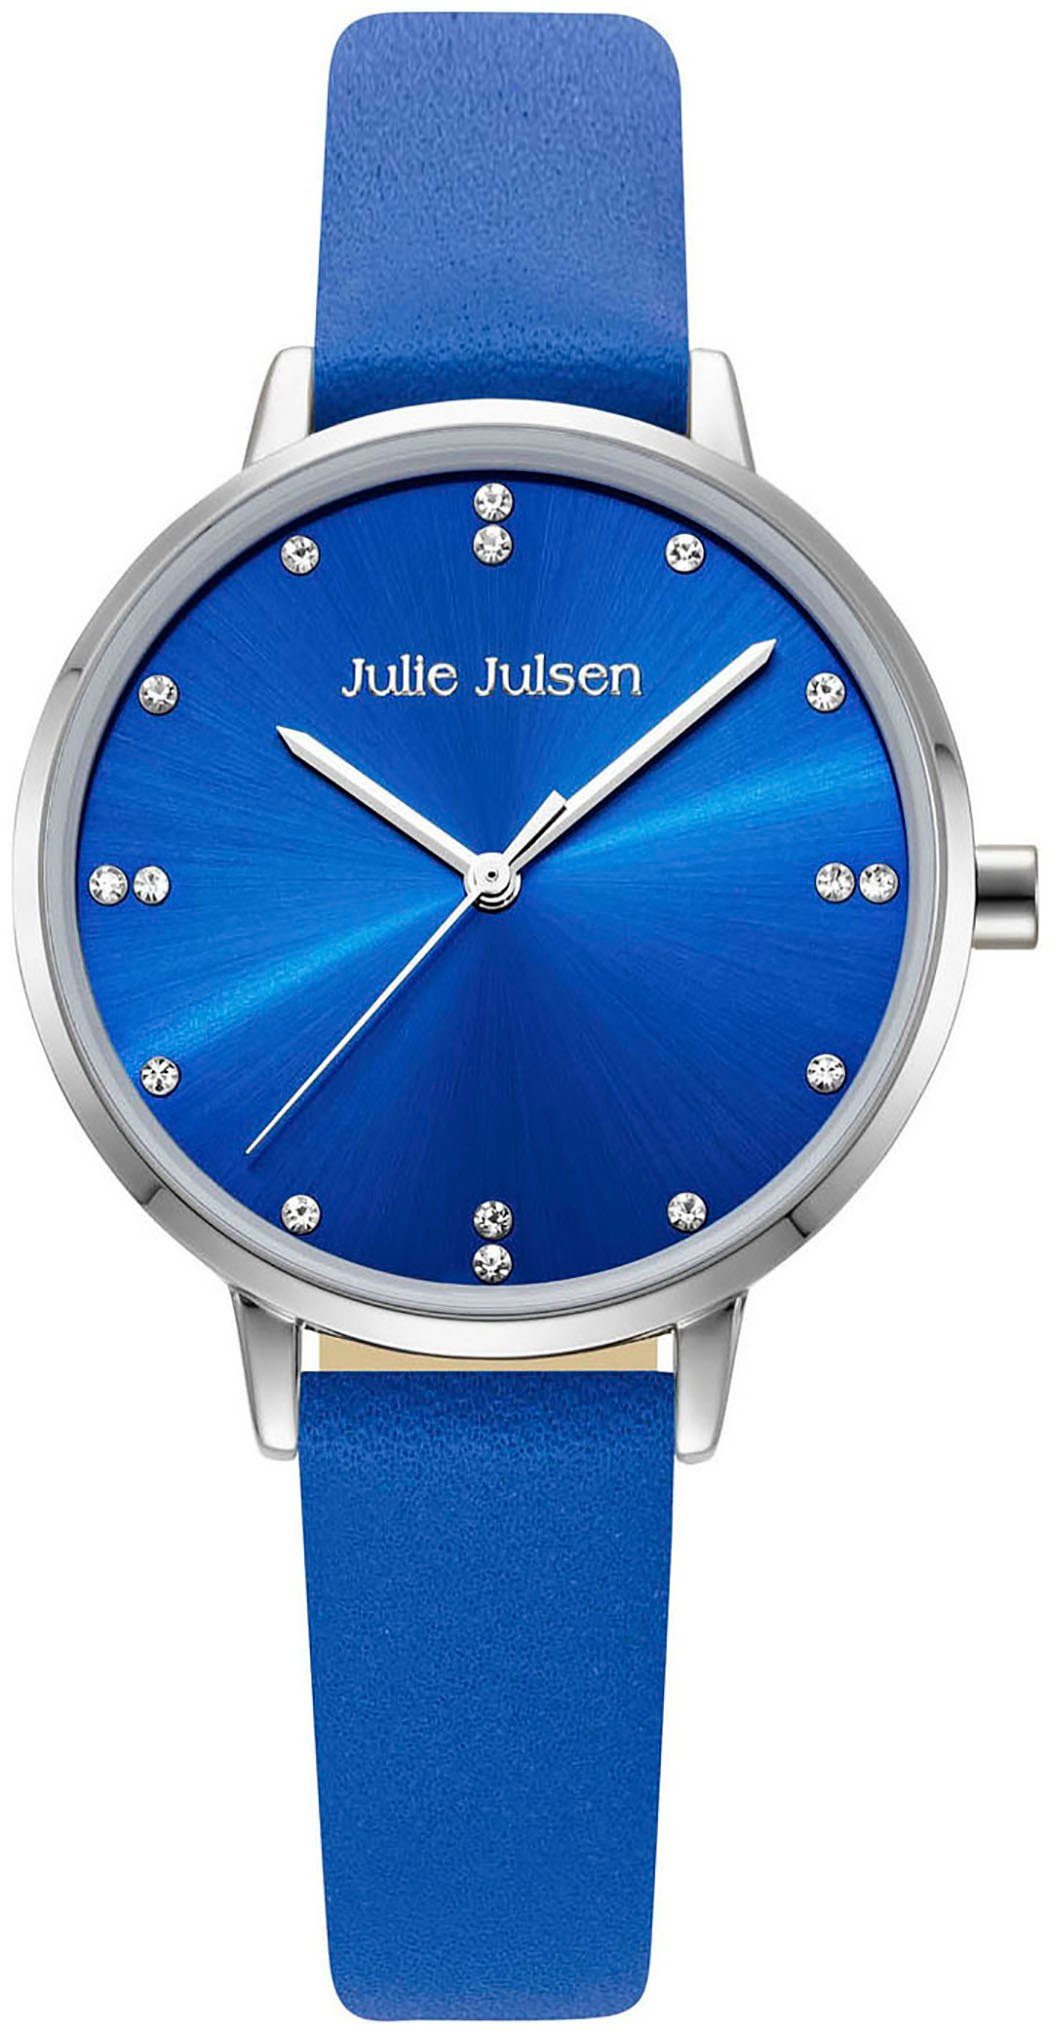 Julie Julsen Quarzuhr COLOR, Armbanduhr, Damenuhr, gehärtetes Mineralglas, PVD-beschichtet